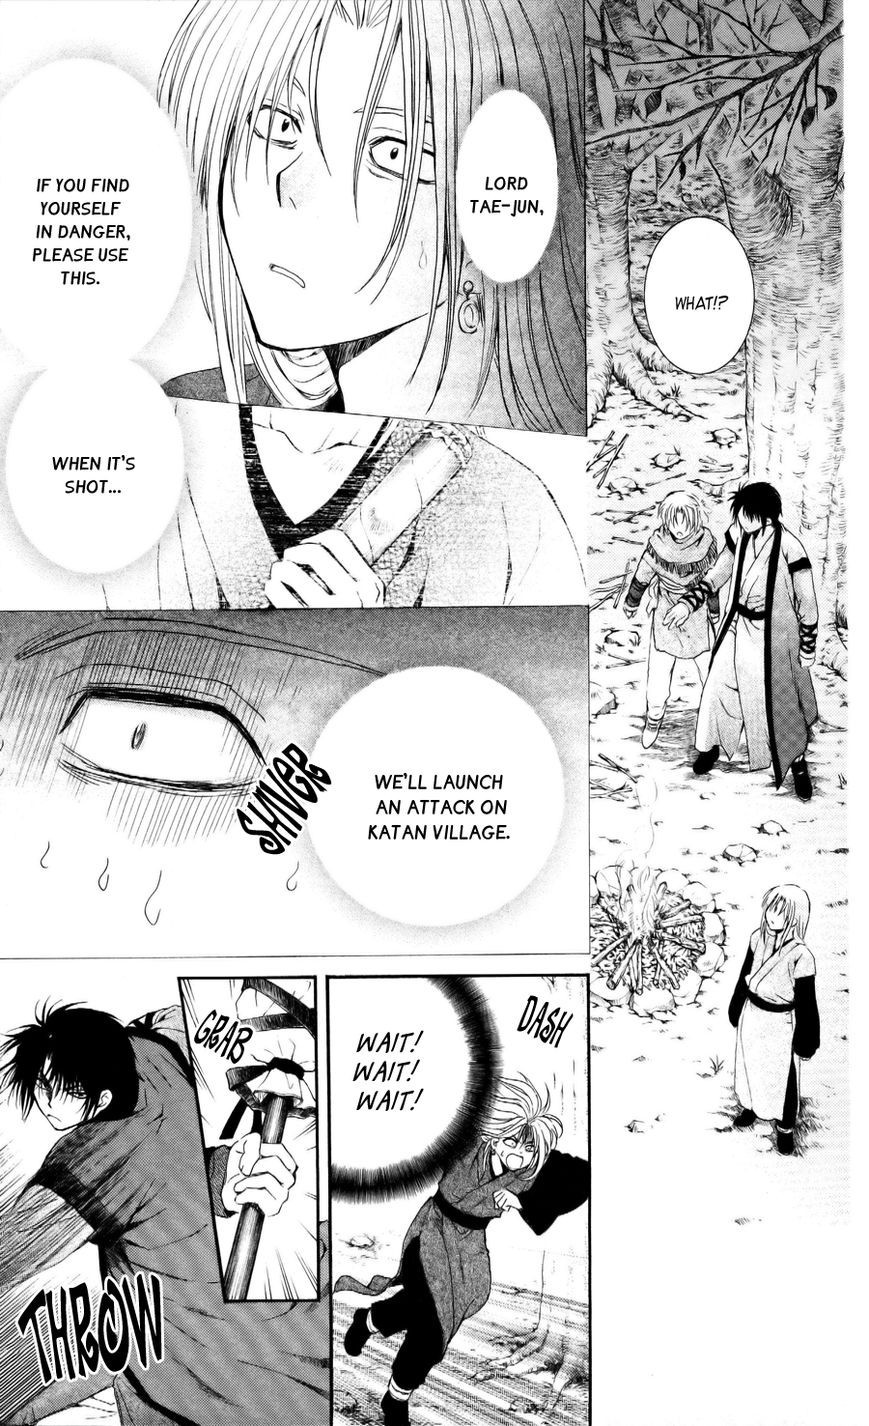 Akatsuki no Yona chapter 55 page 7